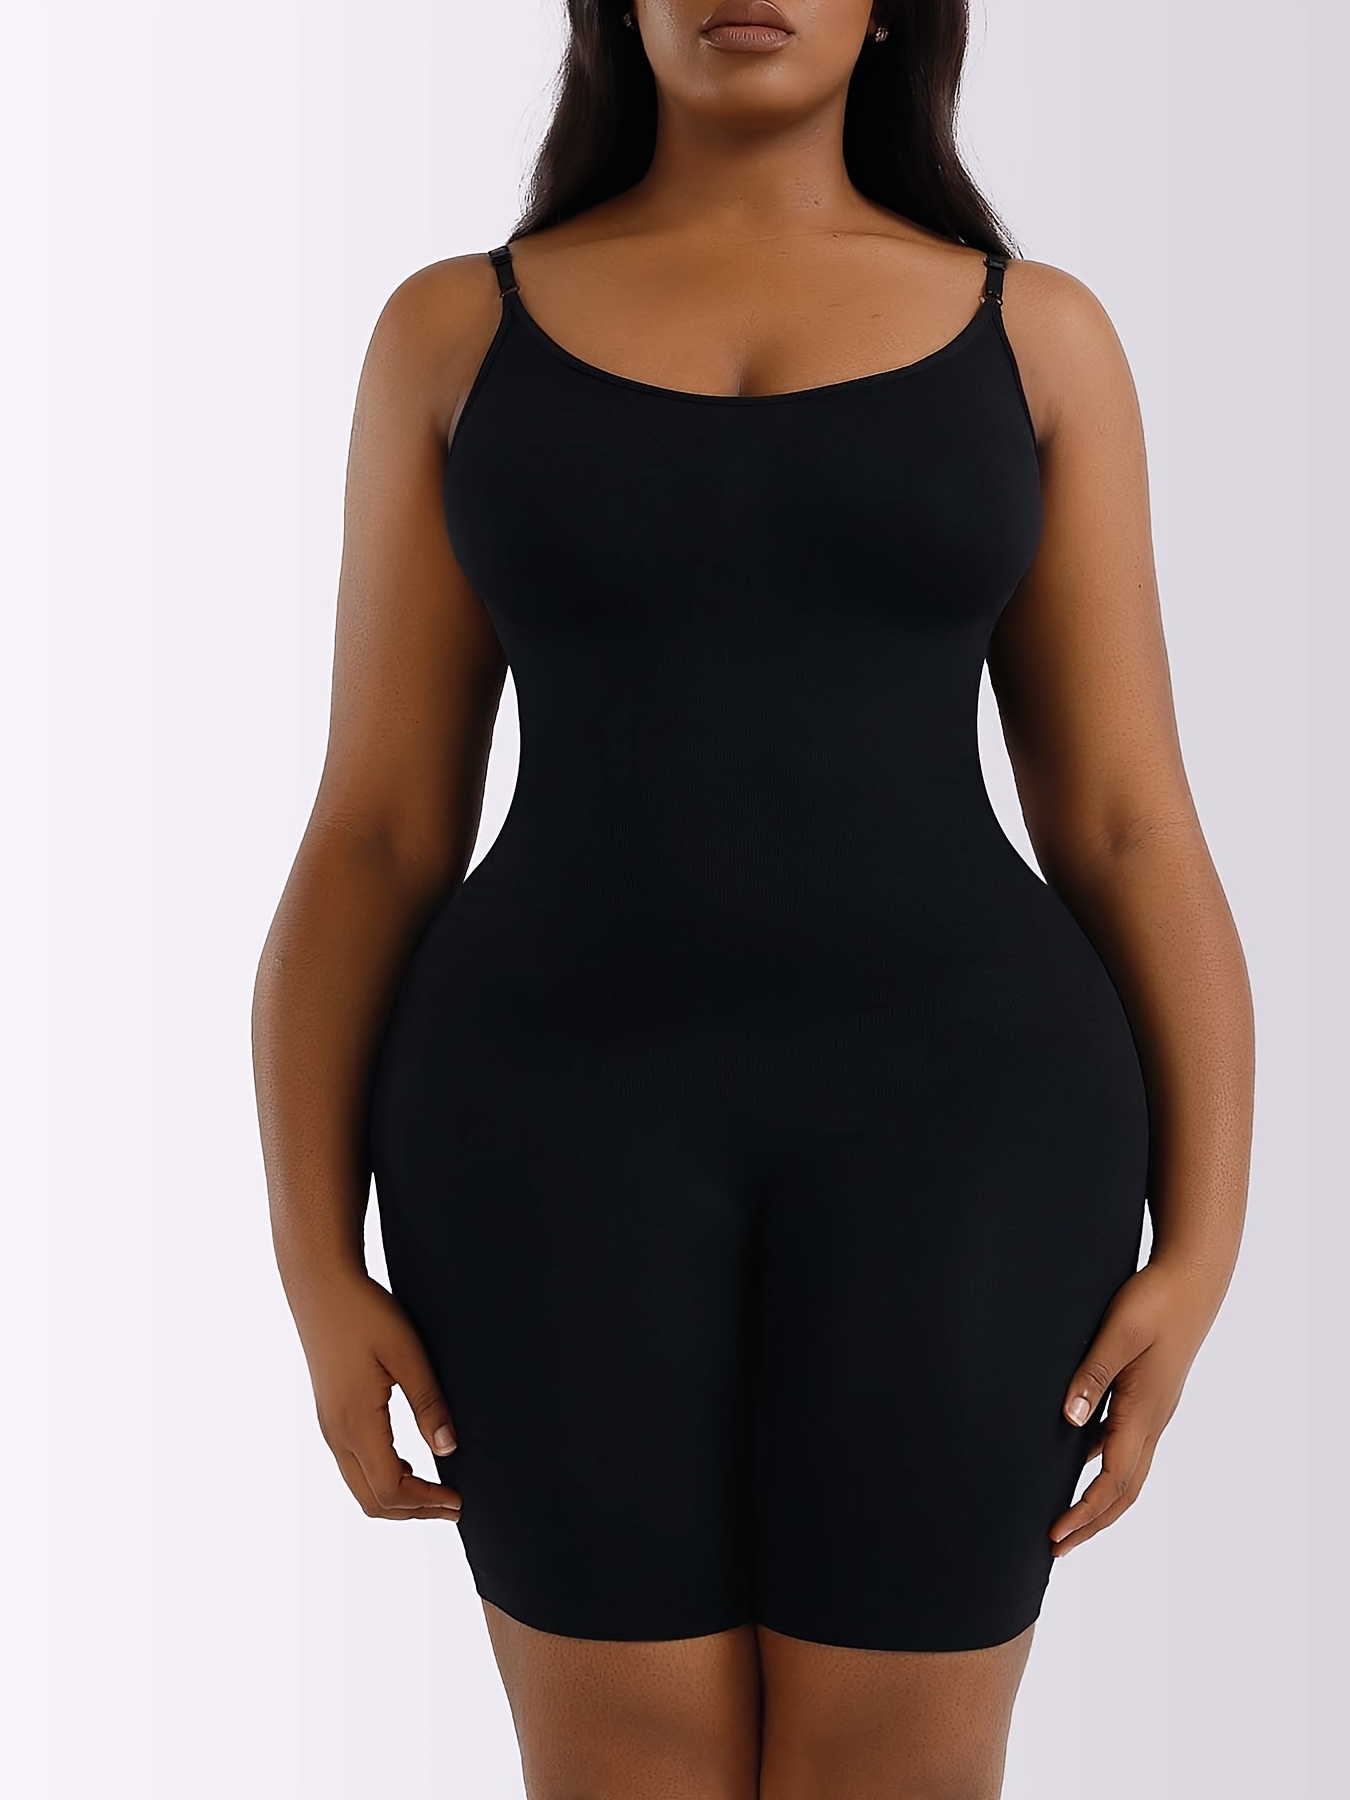 Seamless Firm Control Tummy Slim Hips Up Zipper Underbust Bodysuit - Power  Day Sale